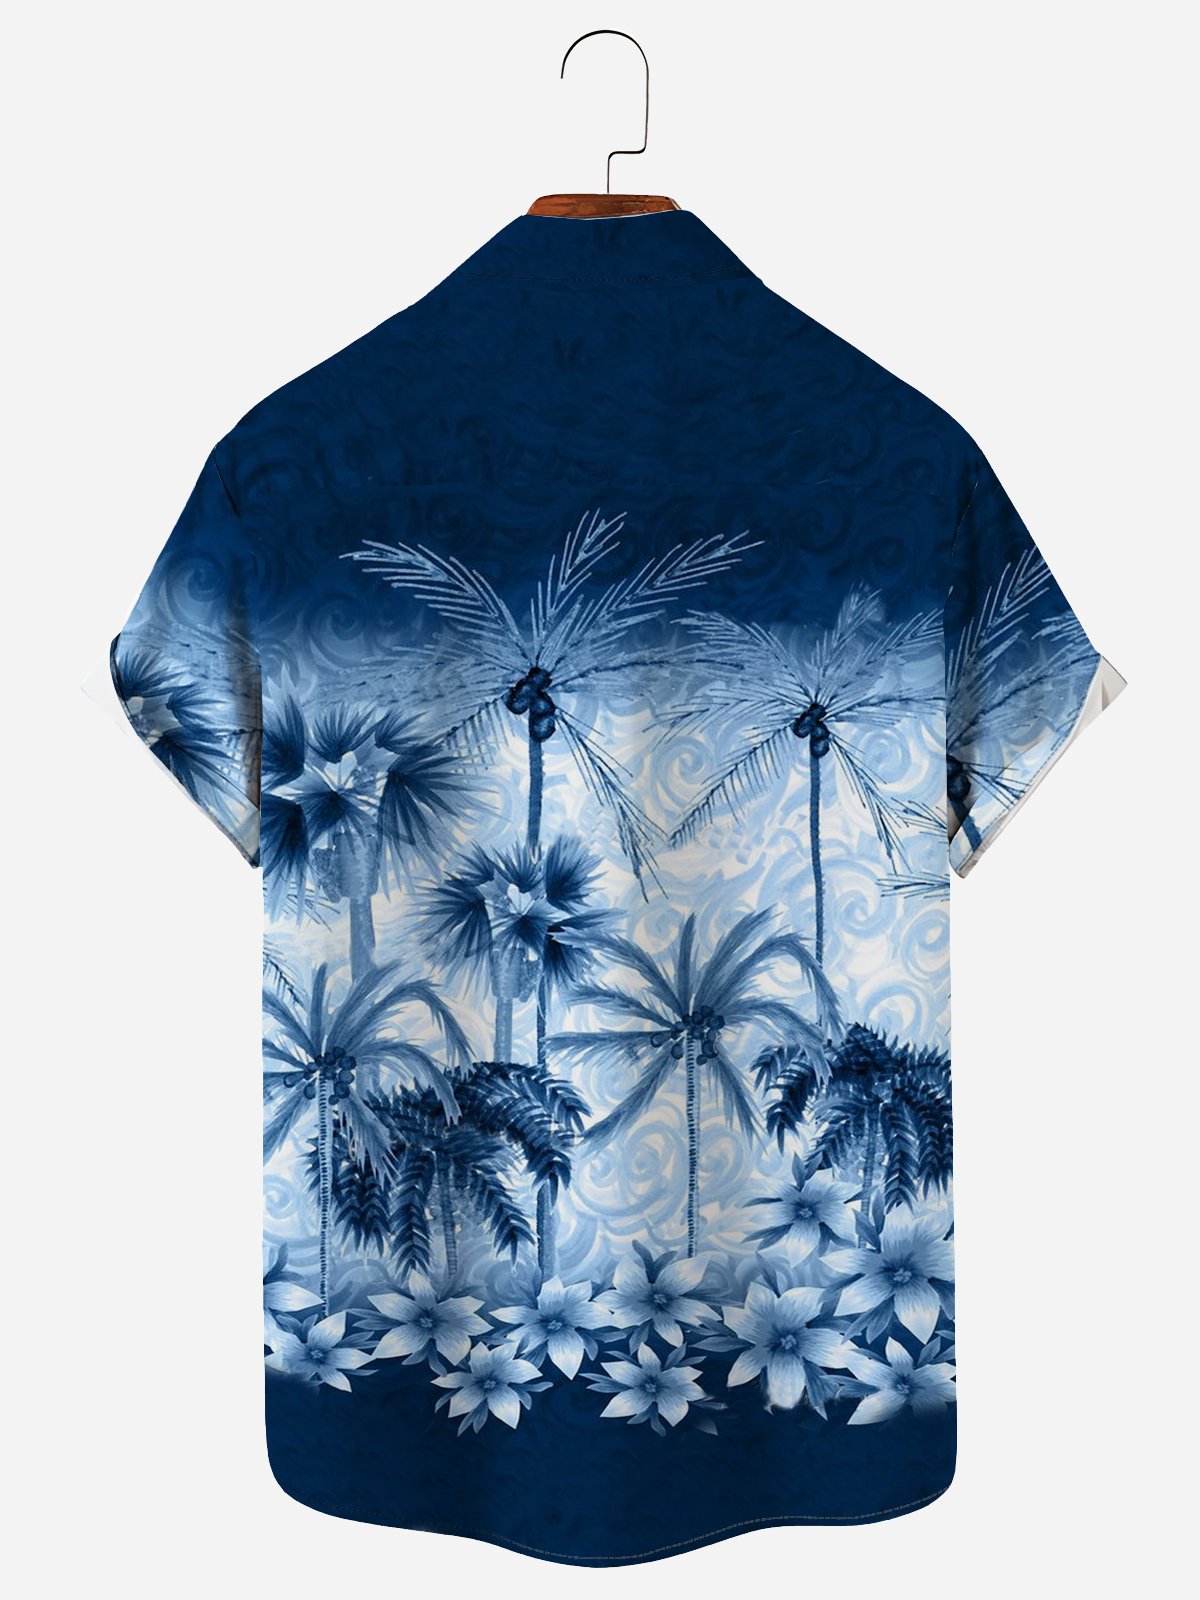 Royaura Coconut Tree Gradual Flower Design Art Print Shirt Plus Size Holiday Shirt